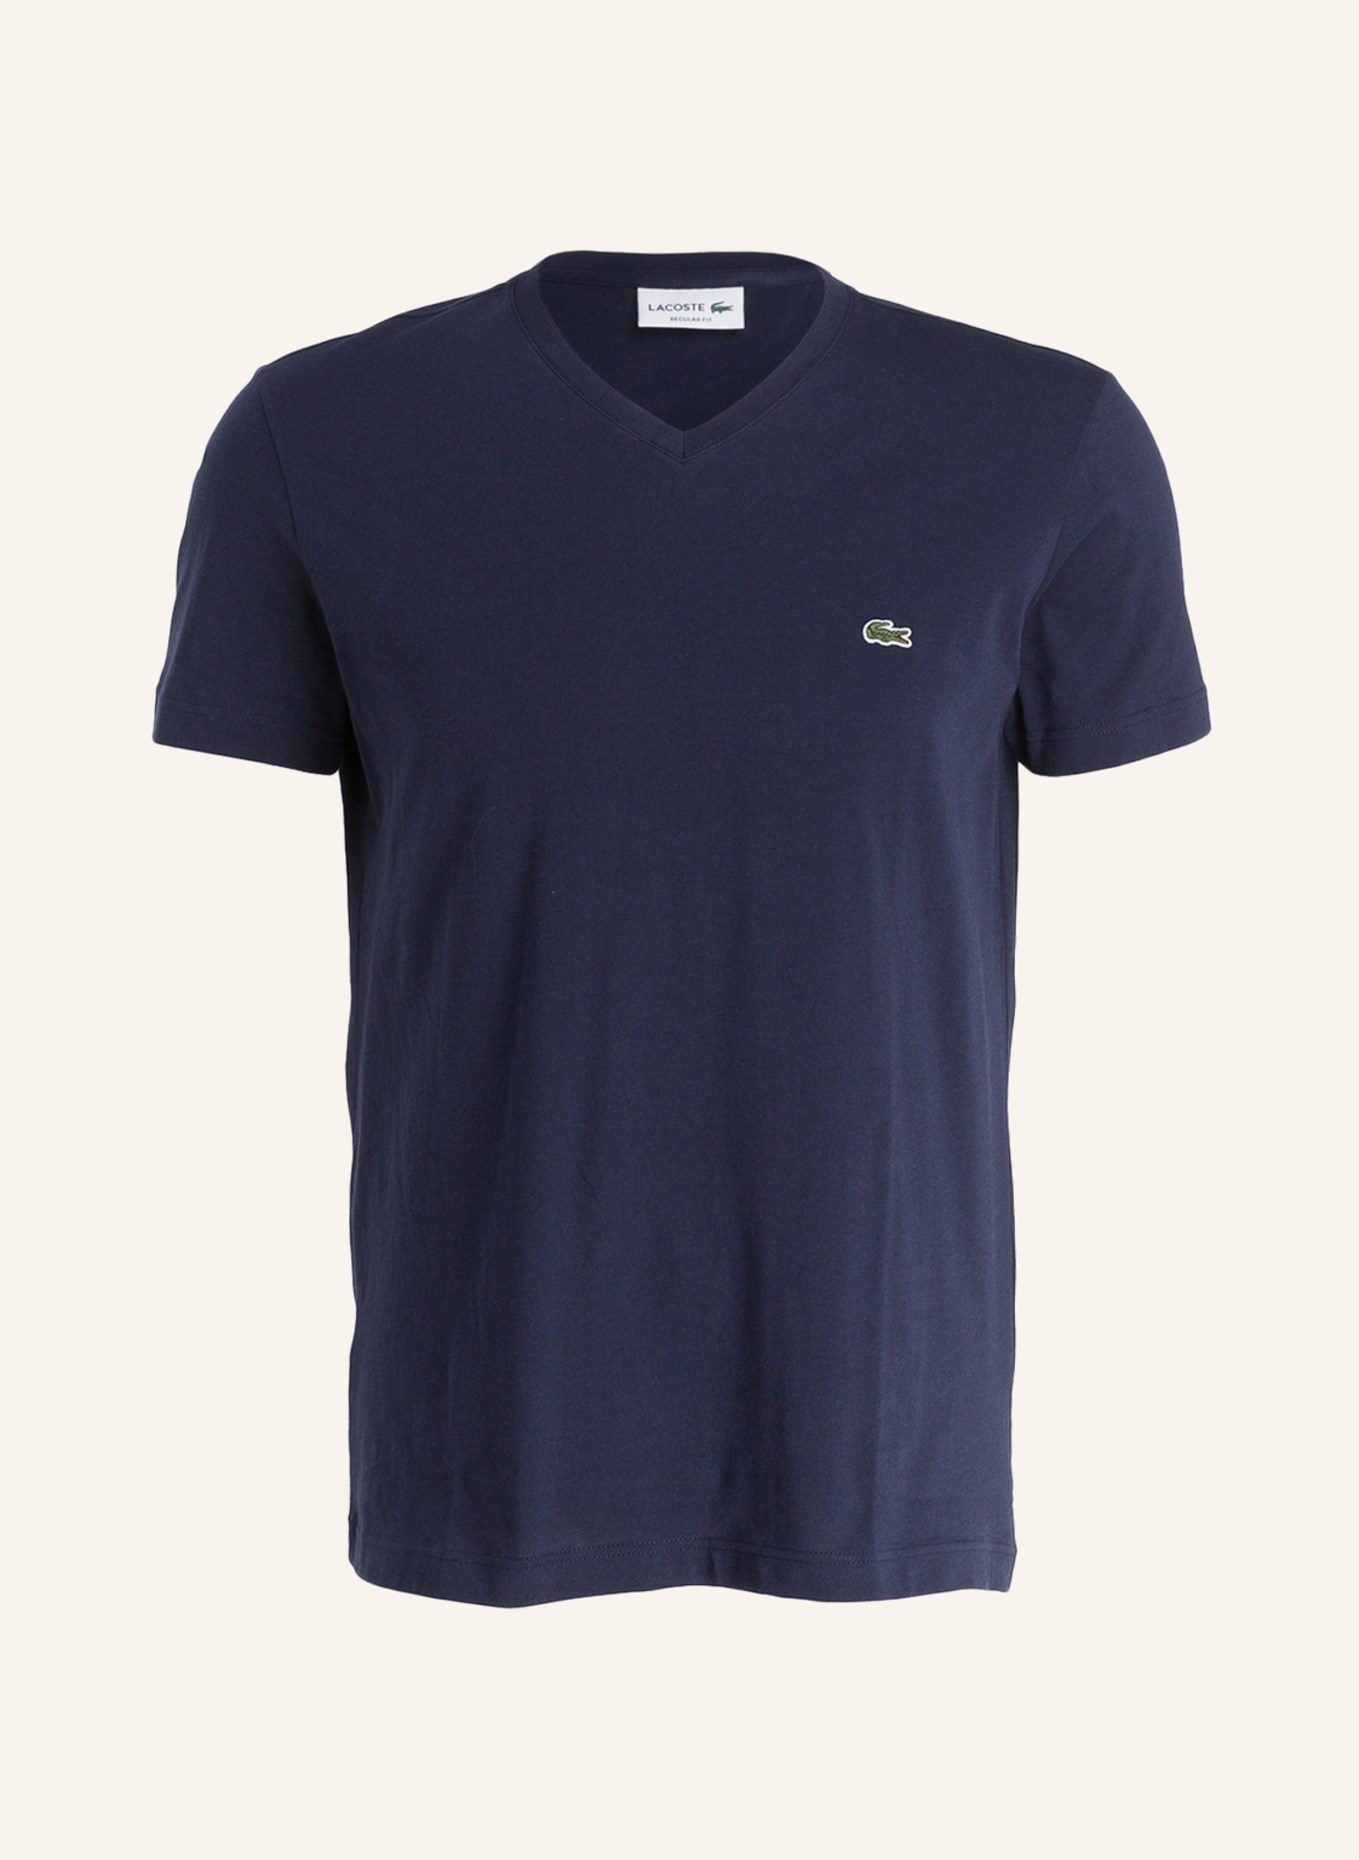 LACOSTE T-Shirt, Farbe: NAVY (Bild 1)